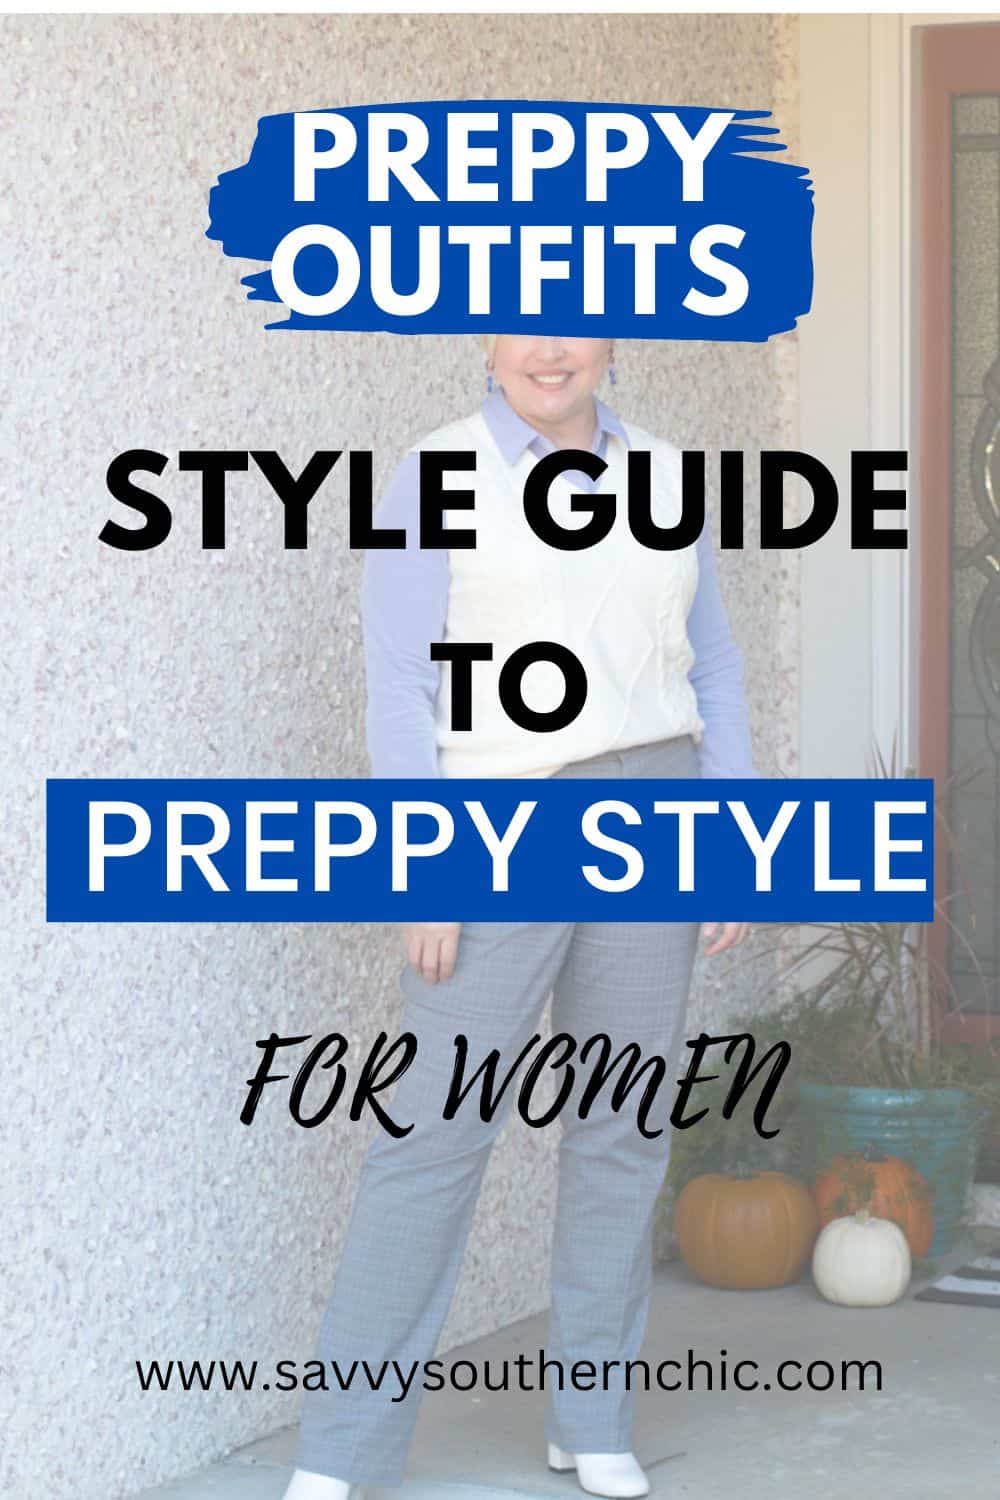 Preppy style guide